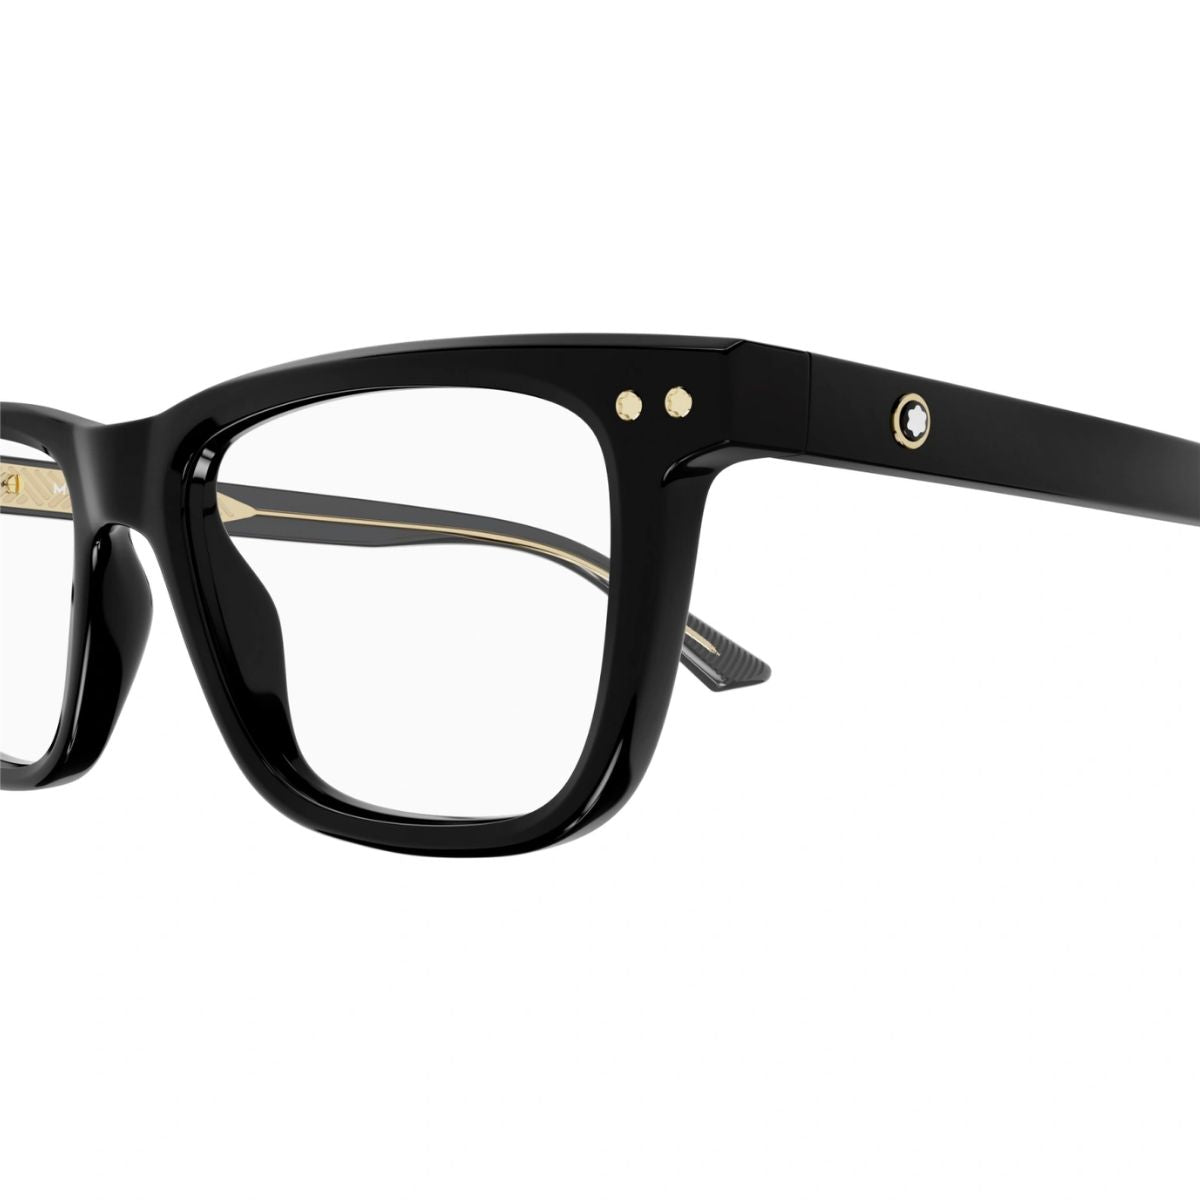 Mont Blac MB0322O frame for mens displayed on Optorium's online shop, showcasing stylish eyewear choices